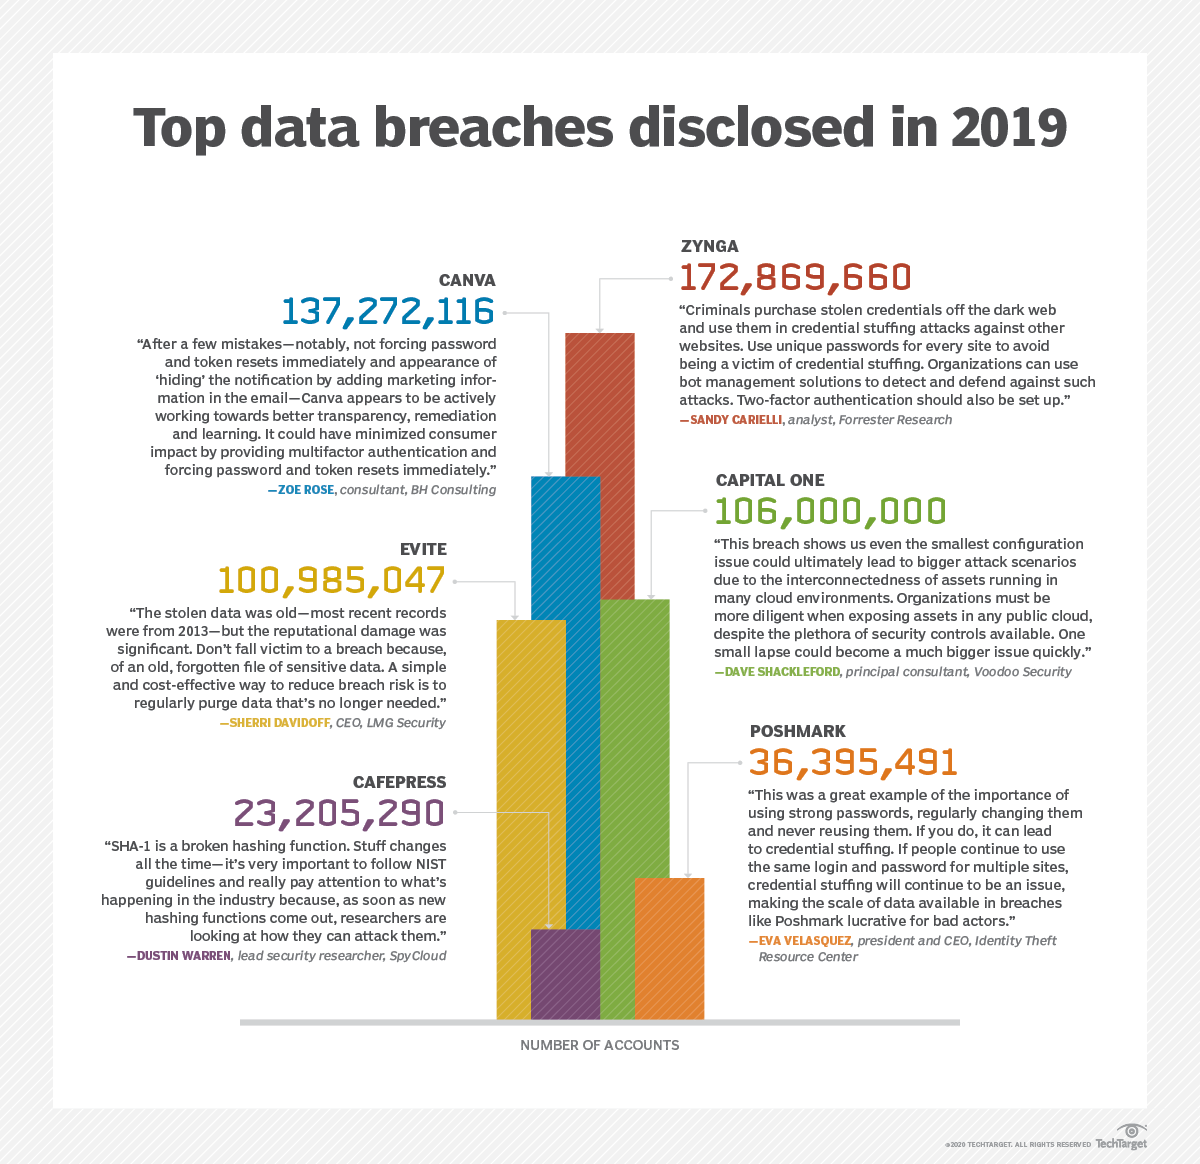 sbi data breach (january 2019) case study